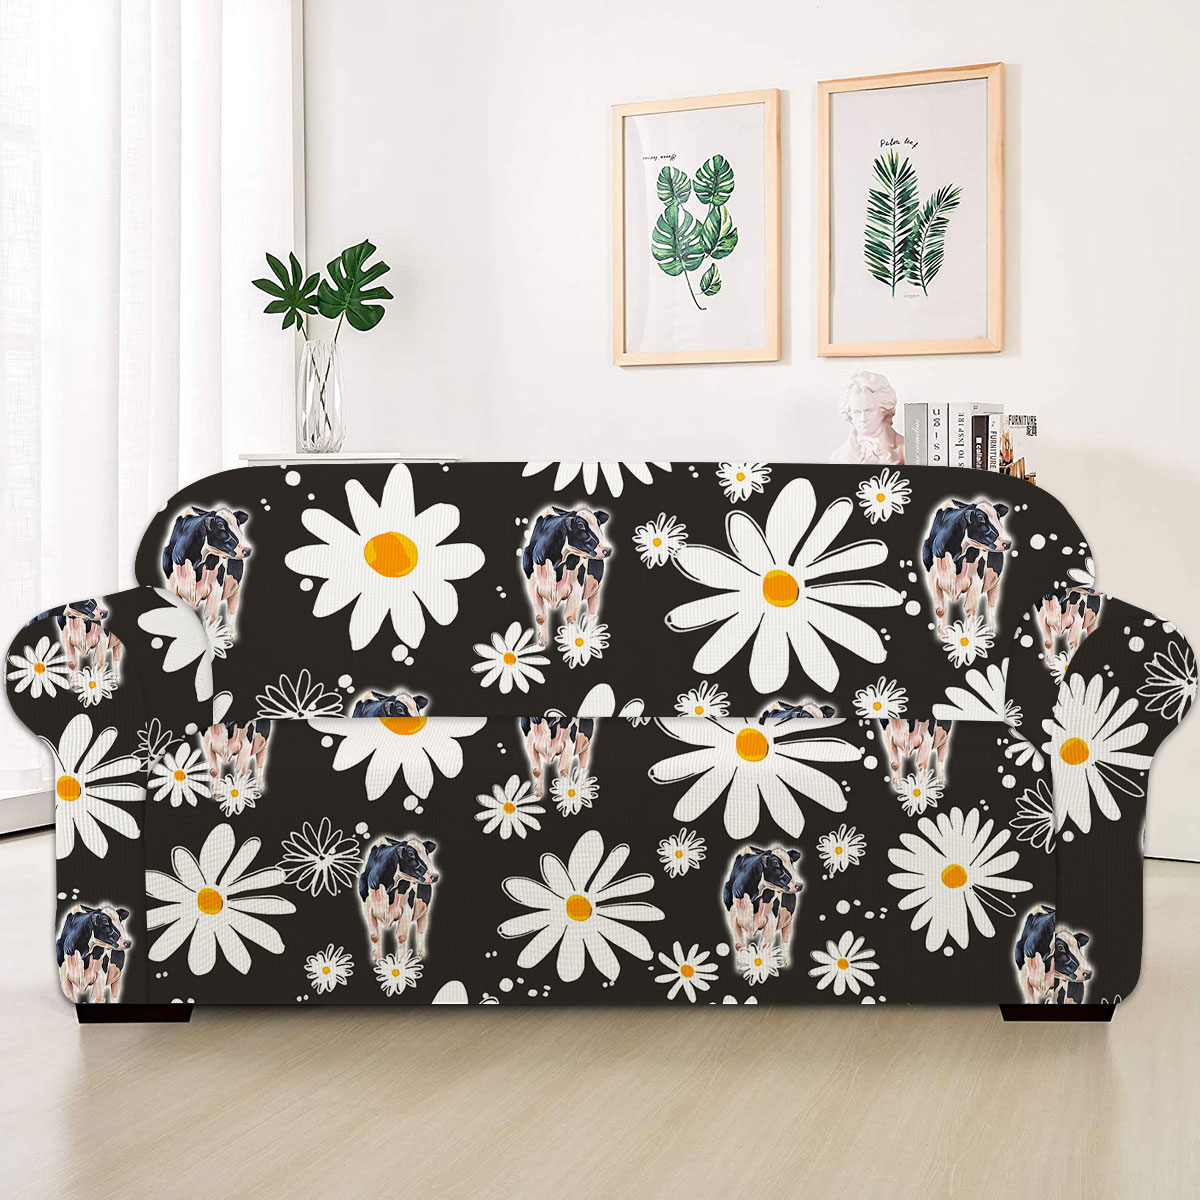 Holstein Daisy Flower Pattern Sofa Cover